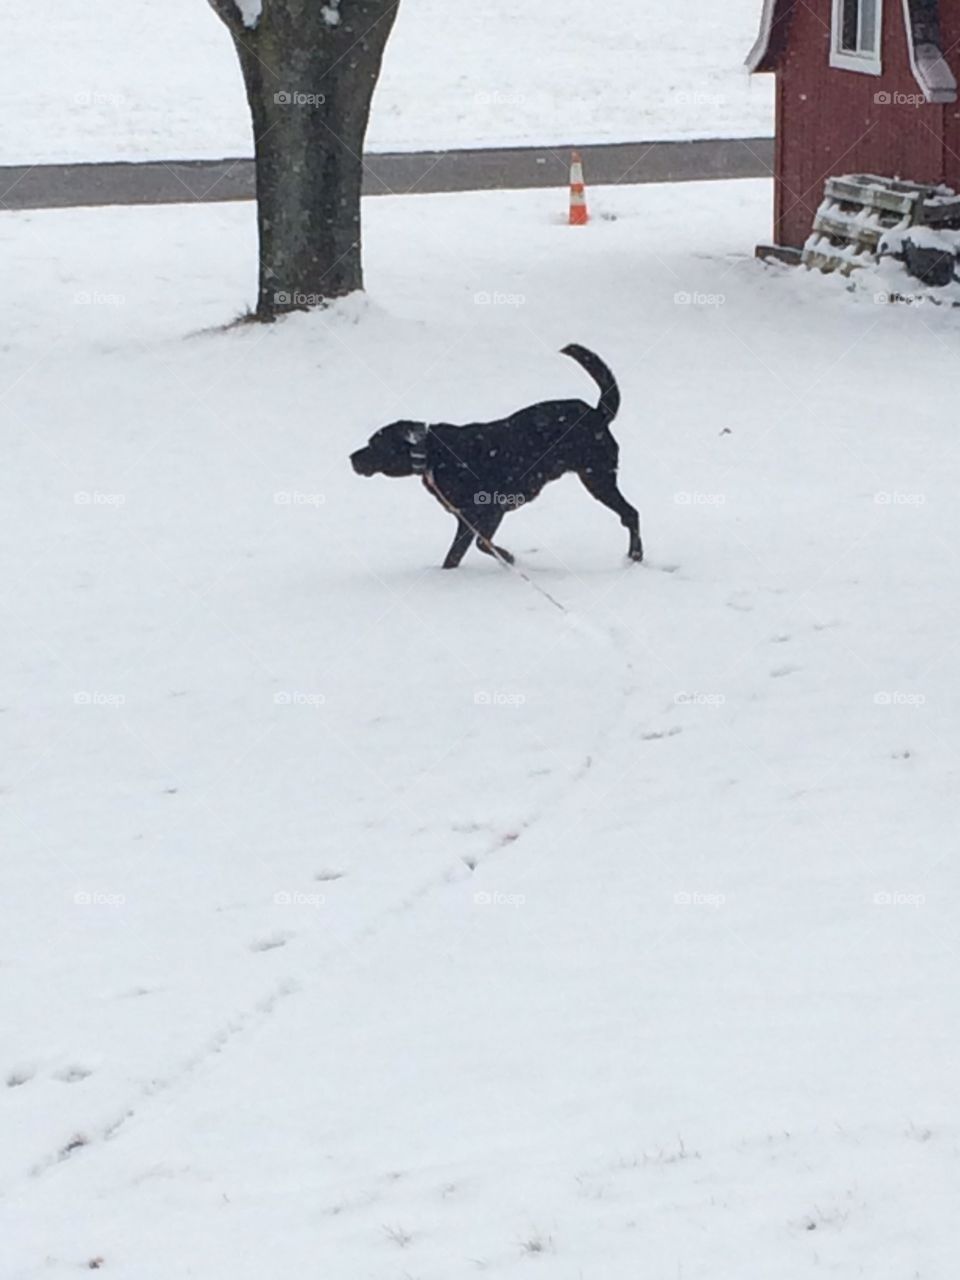 Black dog in the white snow